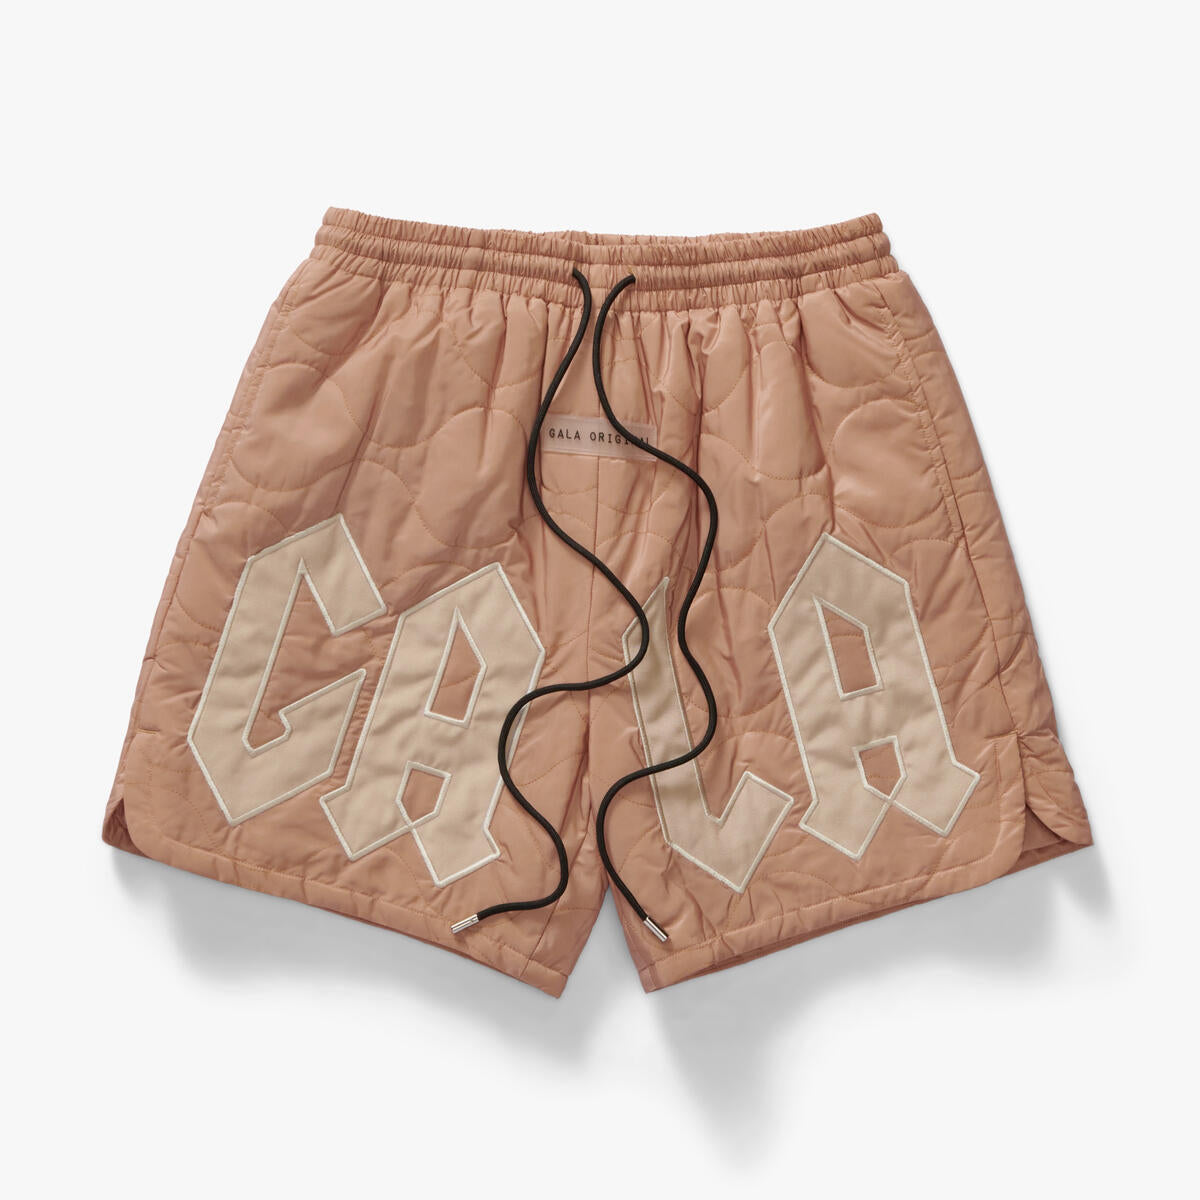 Gala Original “London” Shorts (Khaki)